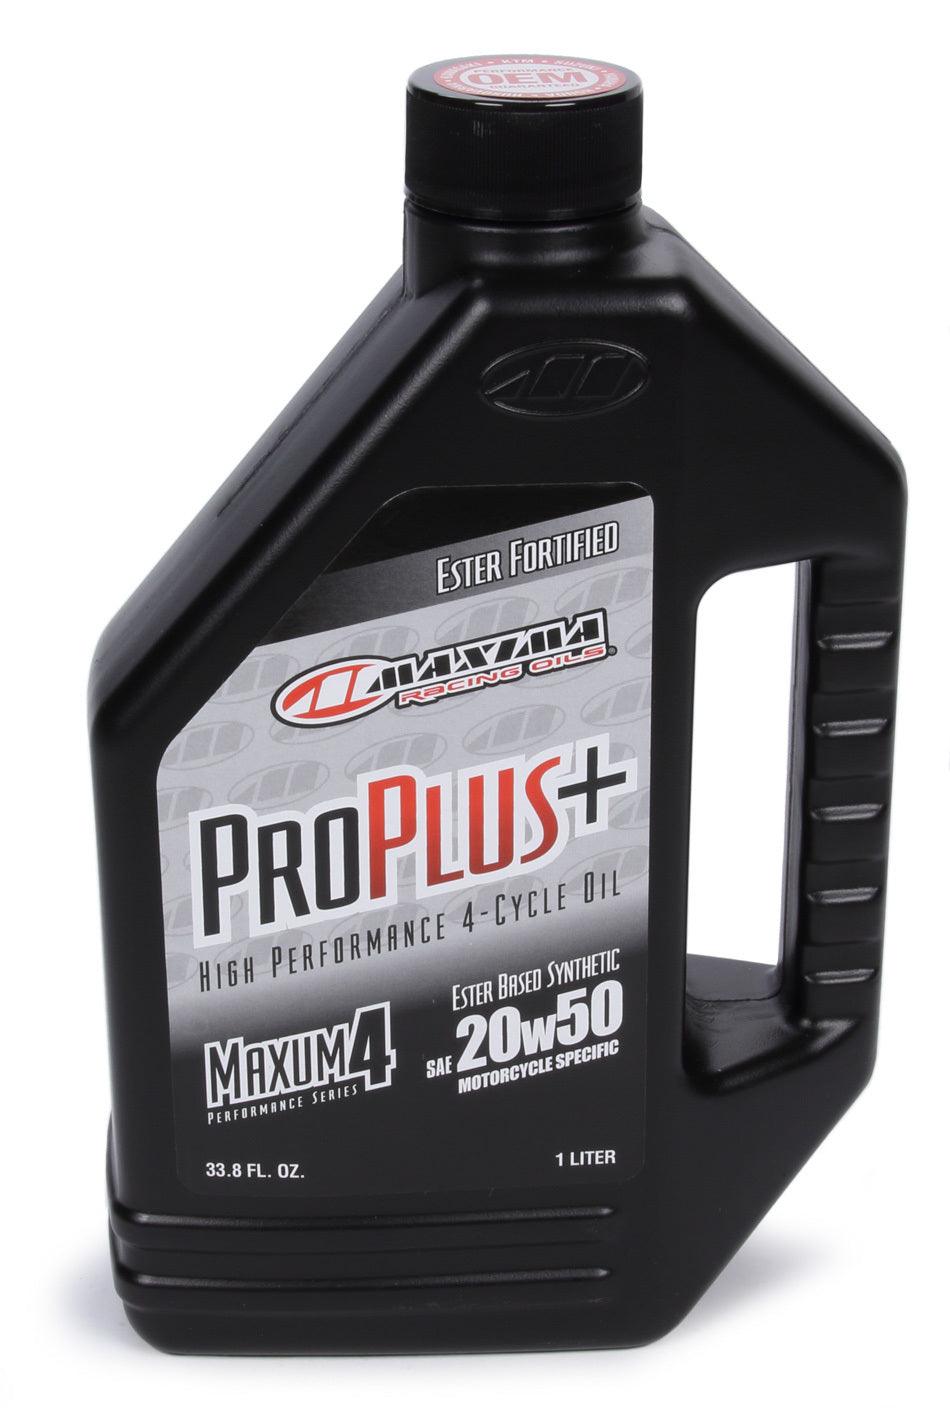 Pro Plus+ 20w50 Syntheti c 1 Liter - Burlile Performance Products